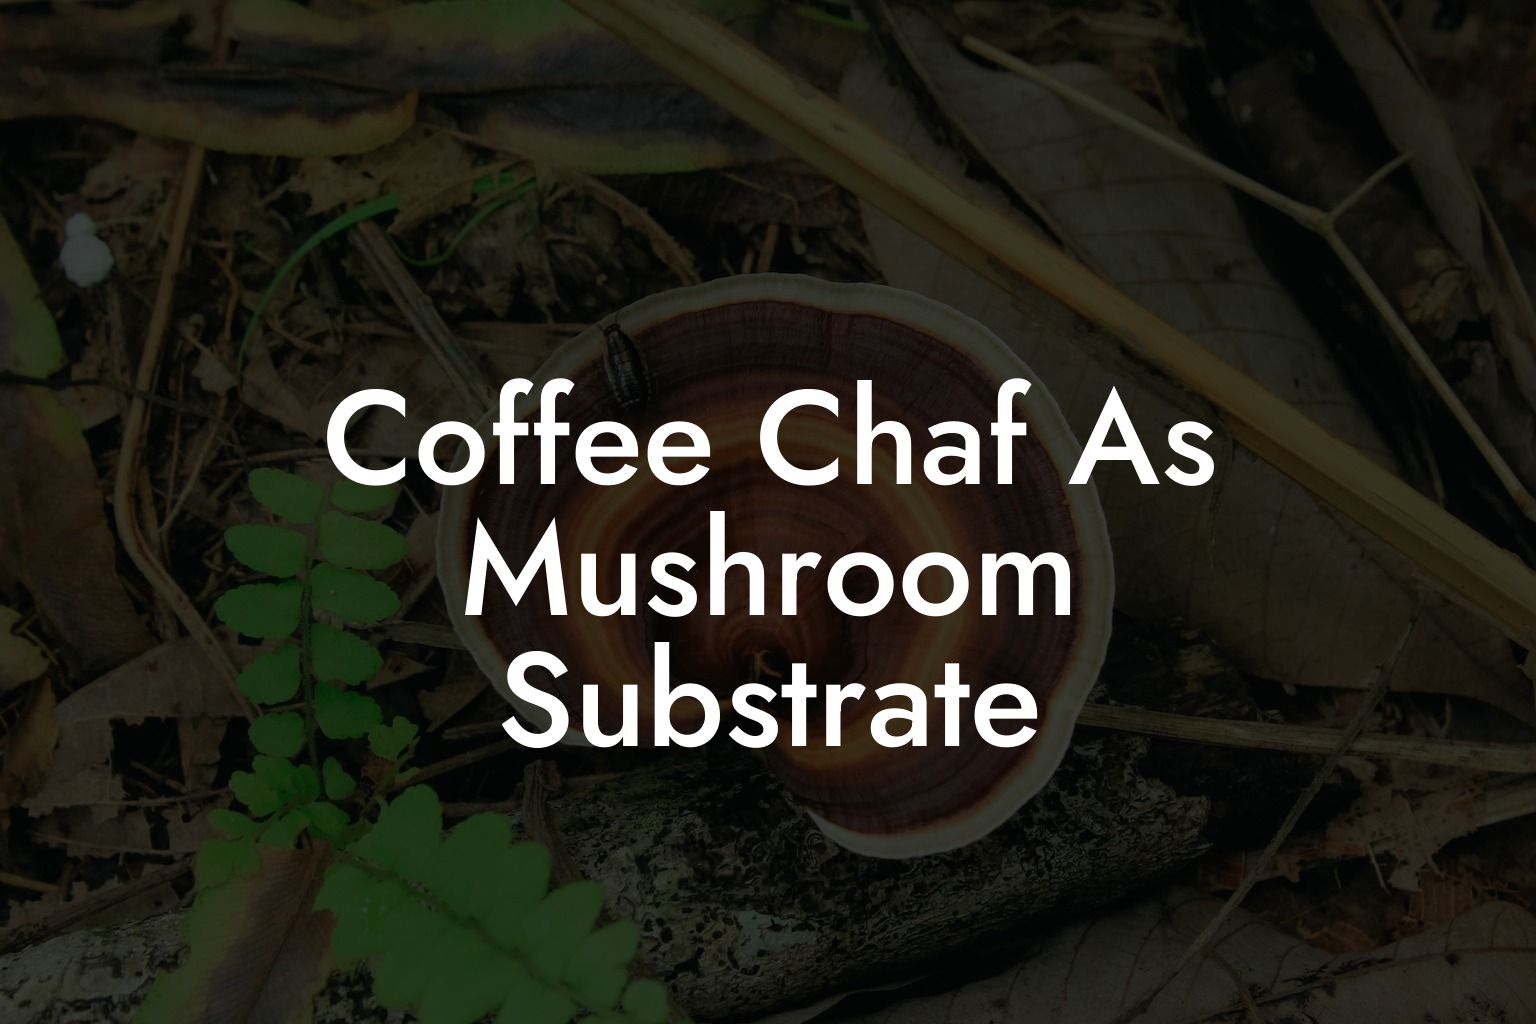 Coffee Chaf As Mushroom Substrate